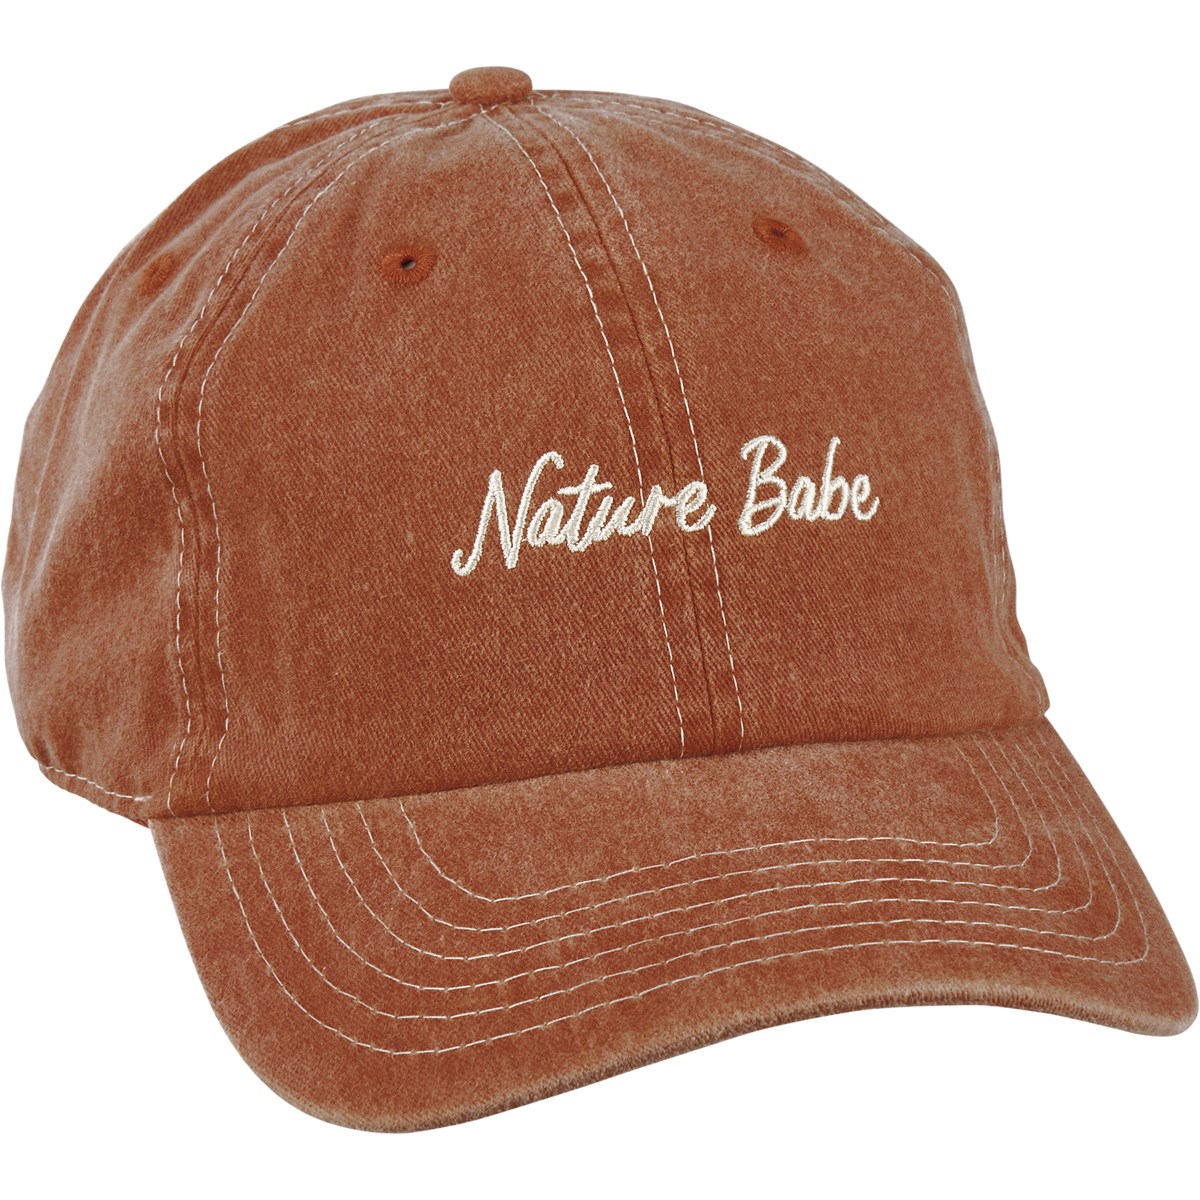 Nature Babe Baseball Cap - Cotton, Metal